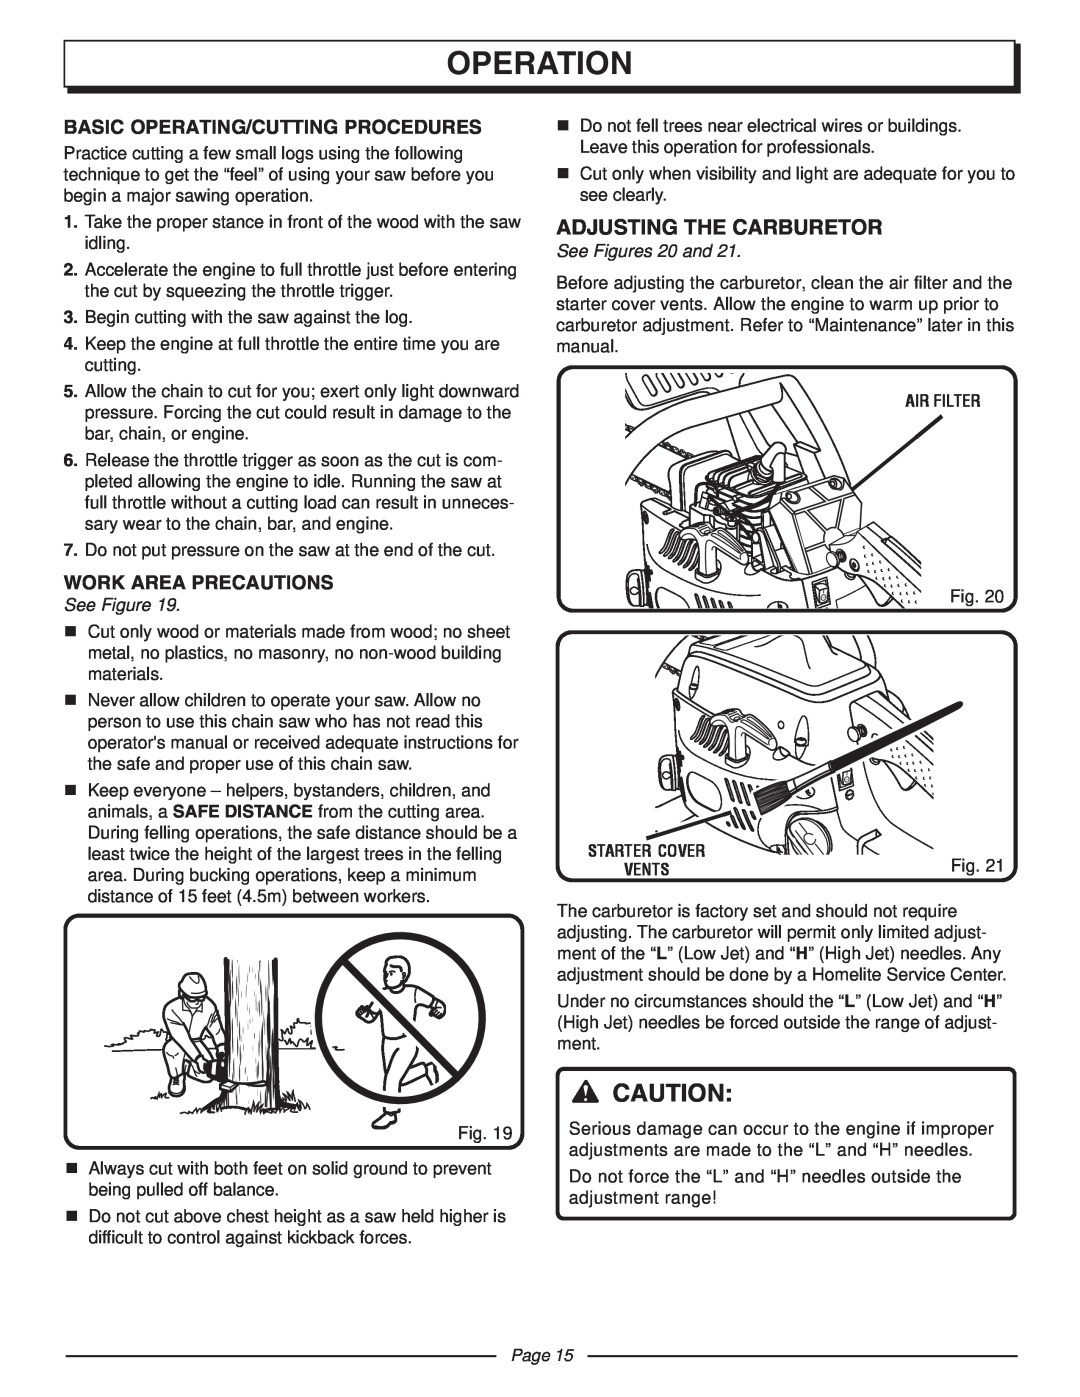 Homelite UT10510A Adjusting The Carburetor, Operation, Basic Operating/Cutting Procedures, Work Area Precautions, Page 